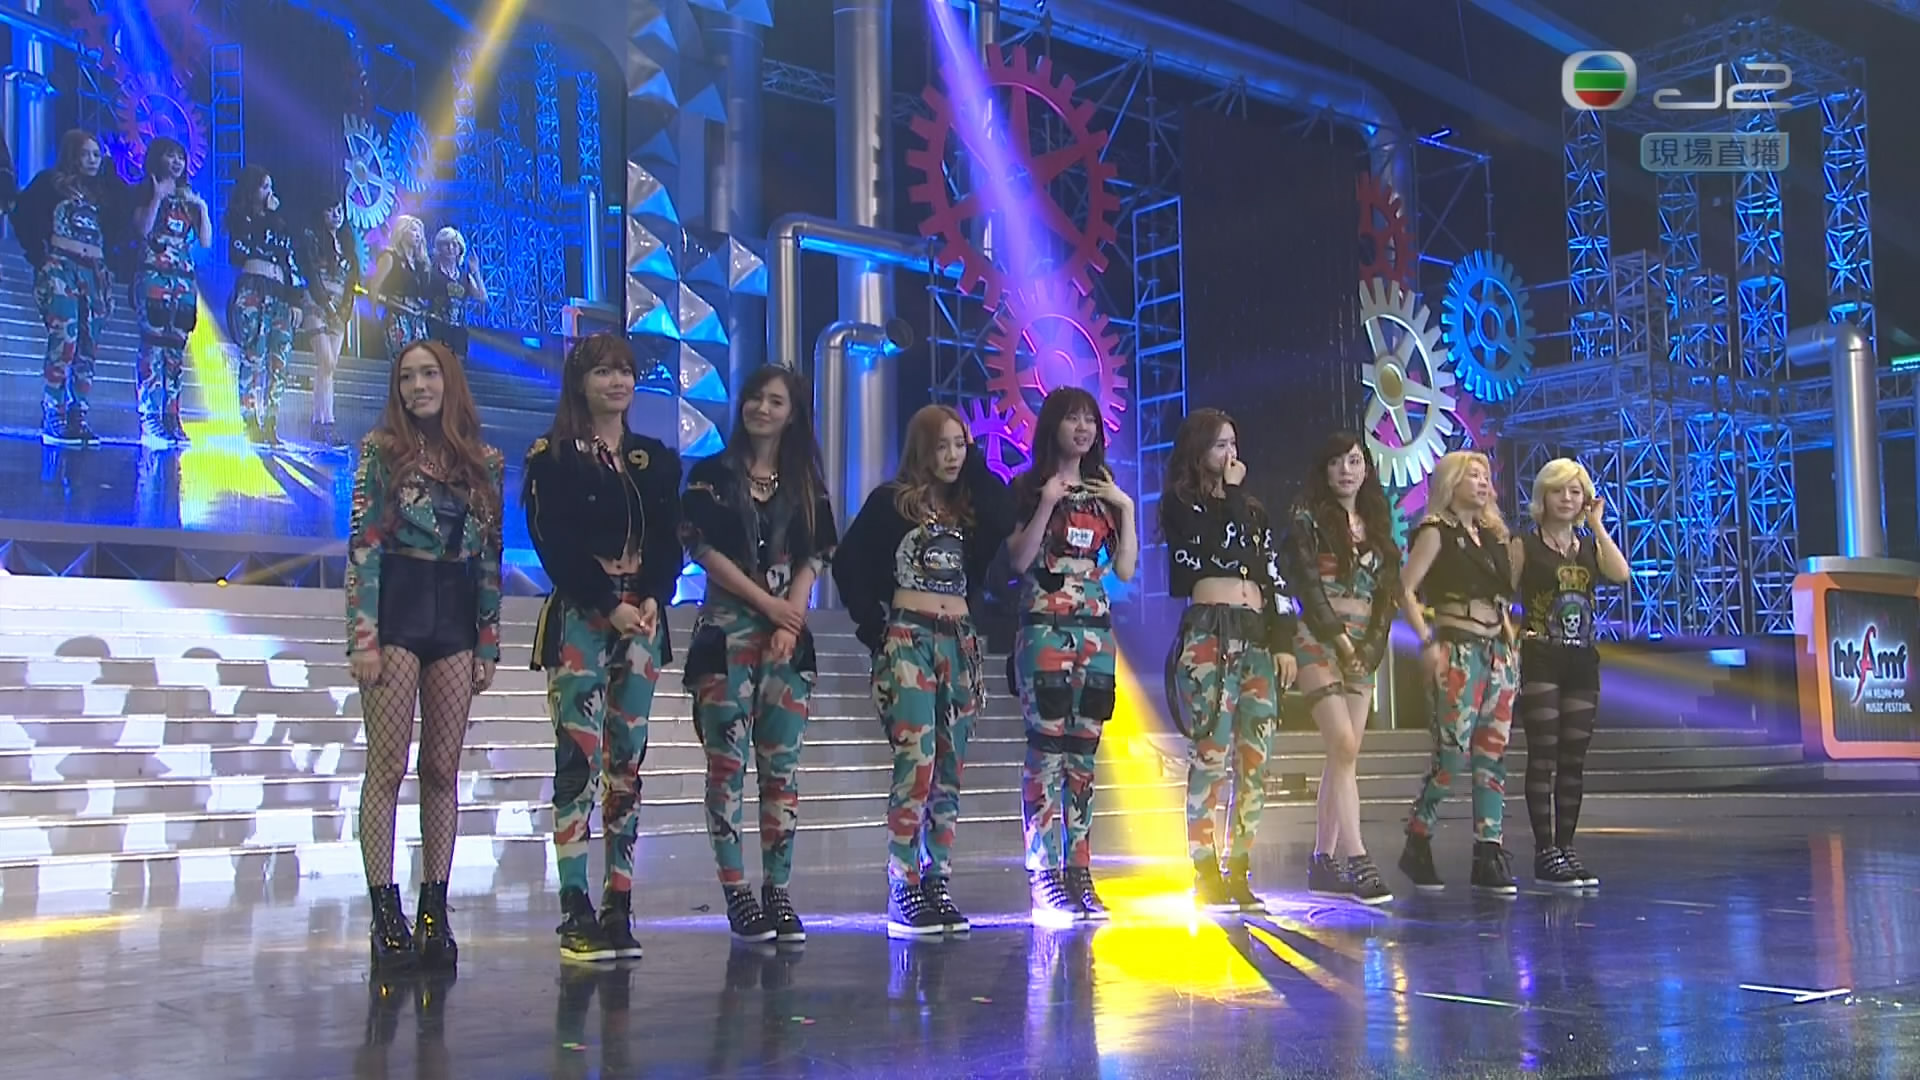 [25-03-2013] Girls’ Generation biểu diễn tại "Asian-Pop Music Festival 2013" tại Hồng Kông Hkampf